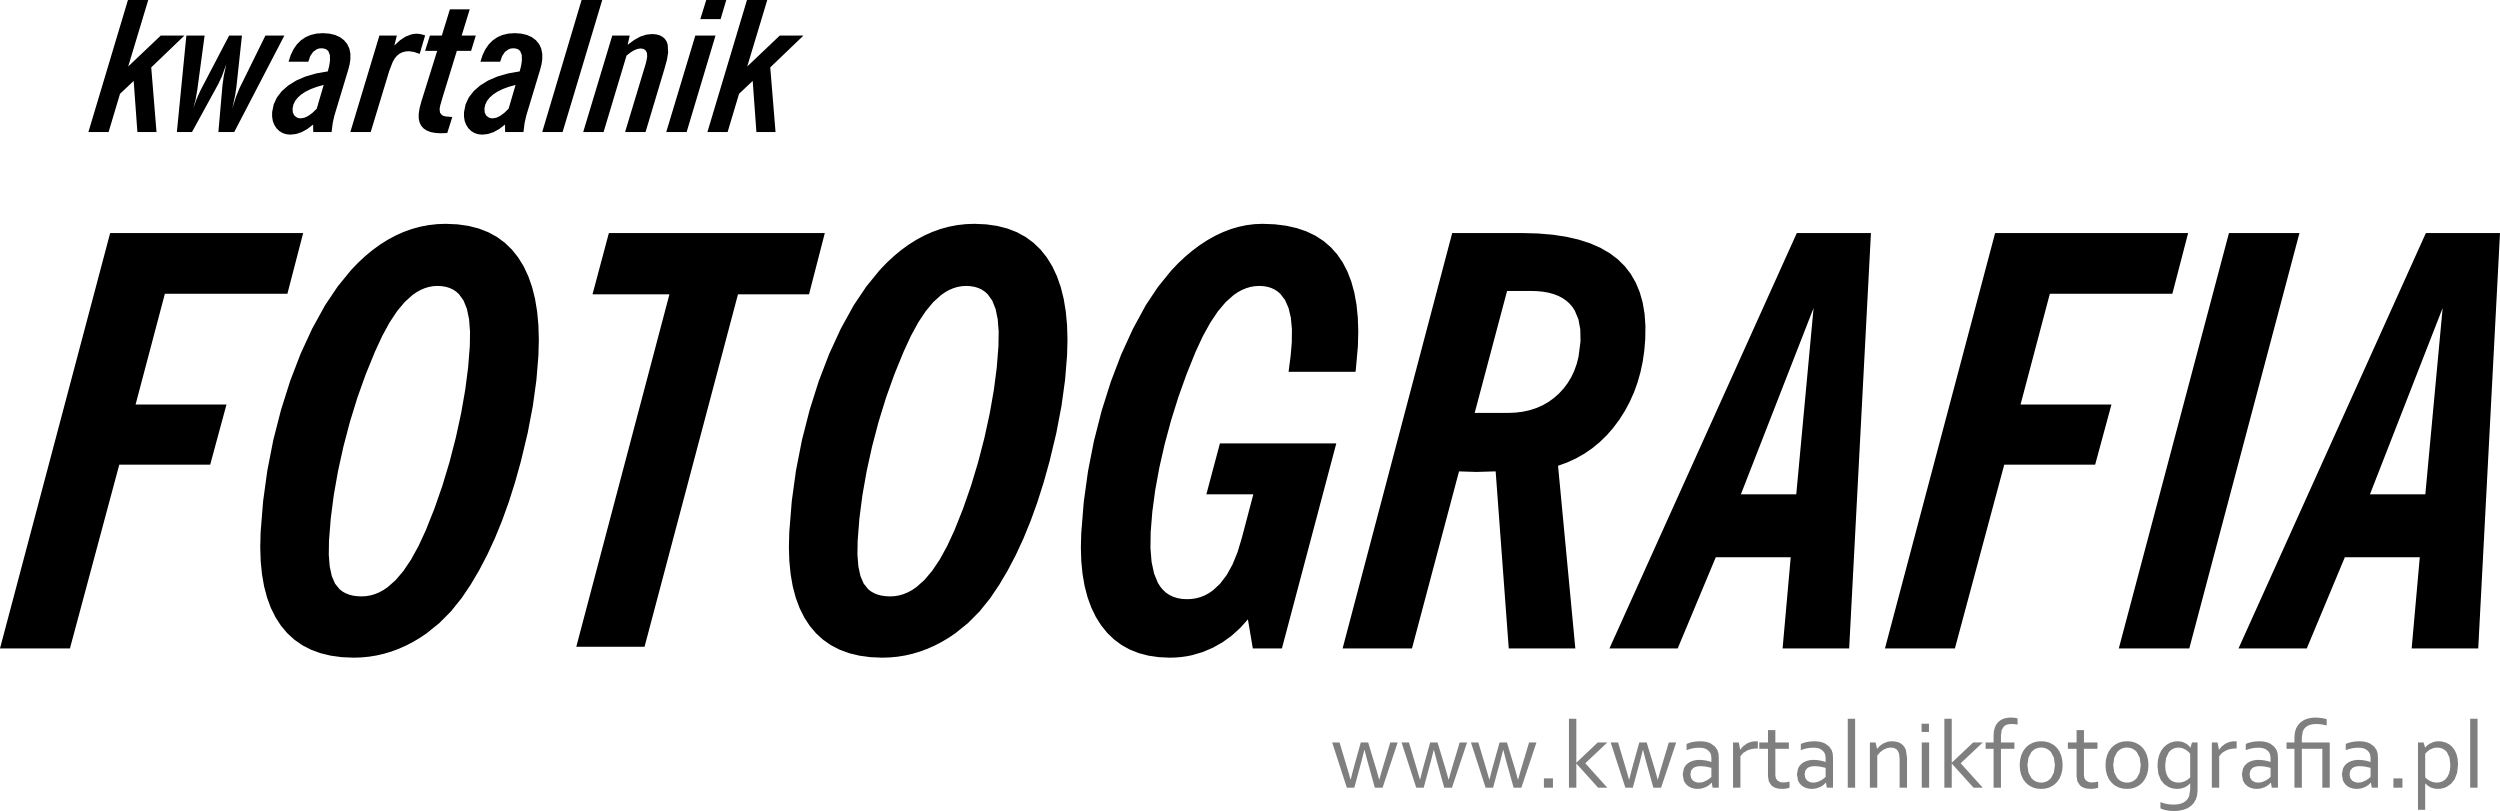 Logo Kwartalnika Fotografia.